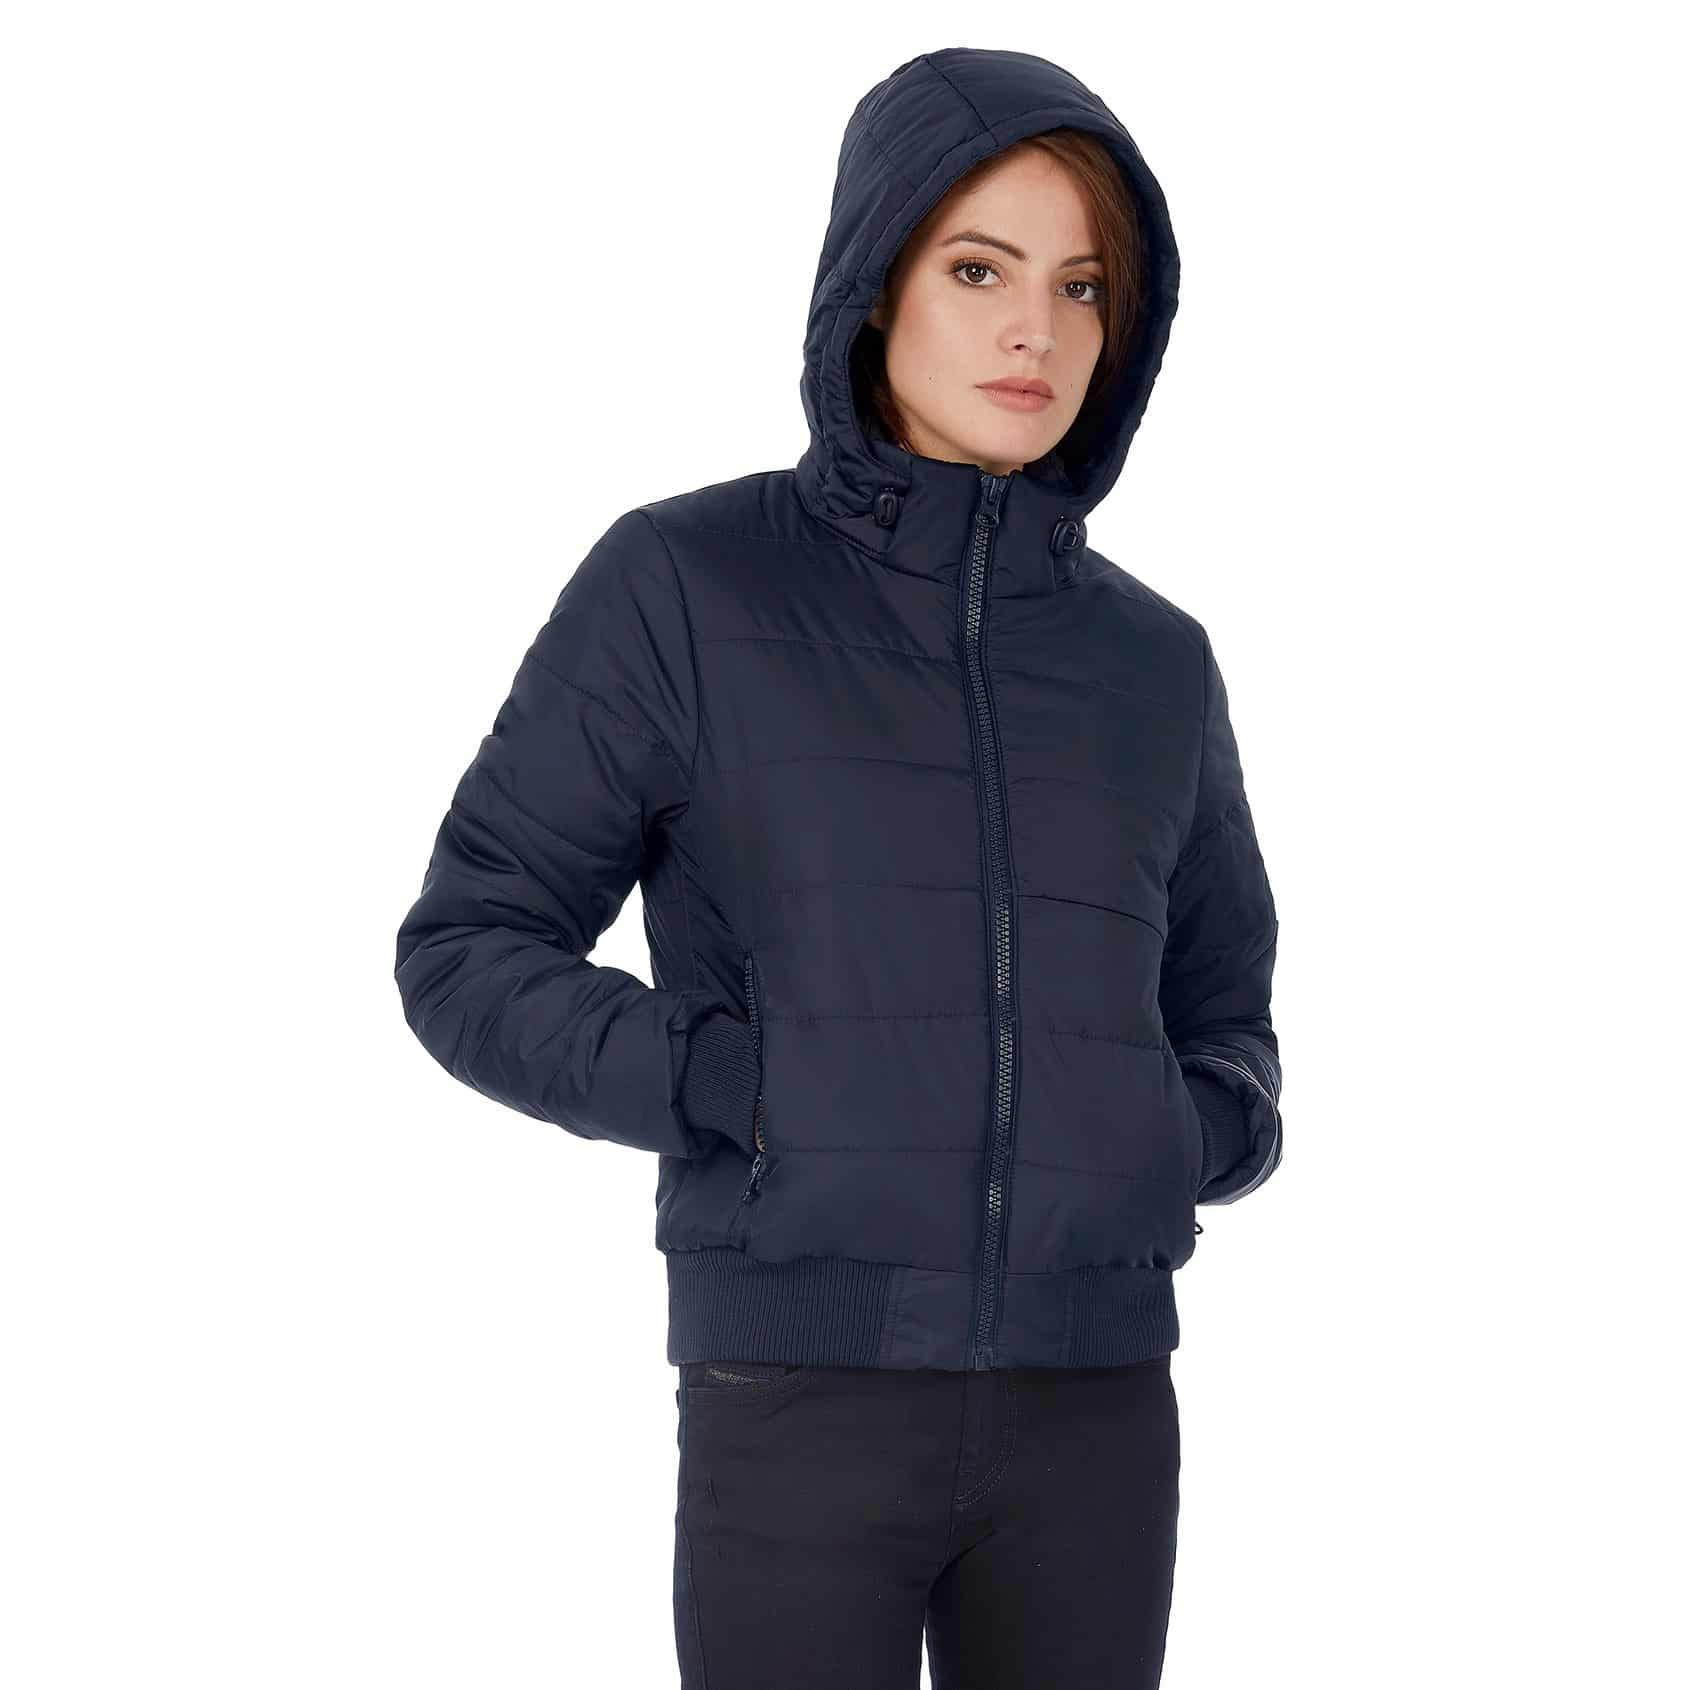 Women's printed bomber jacket with hood